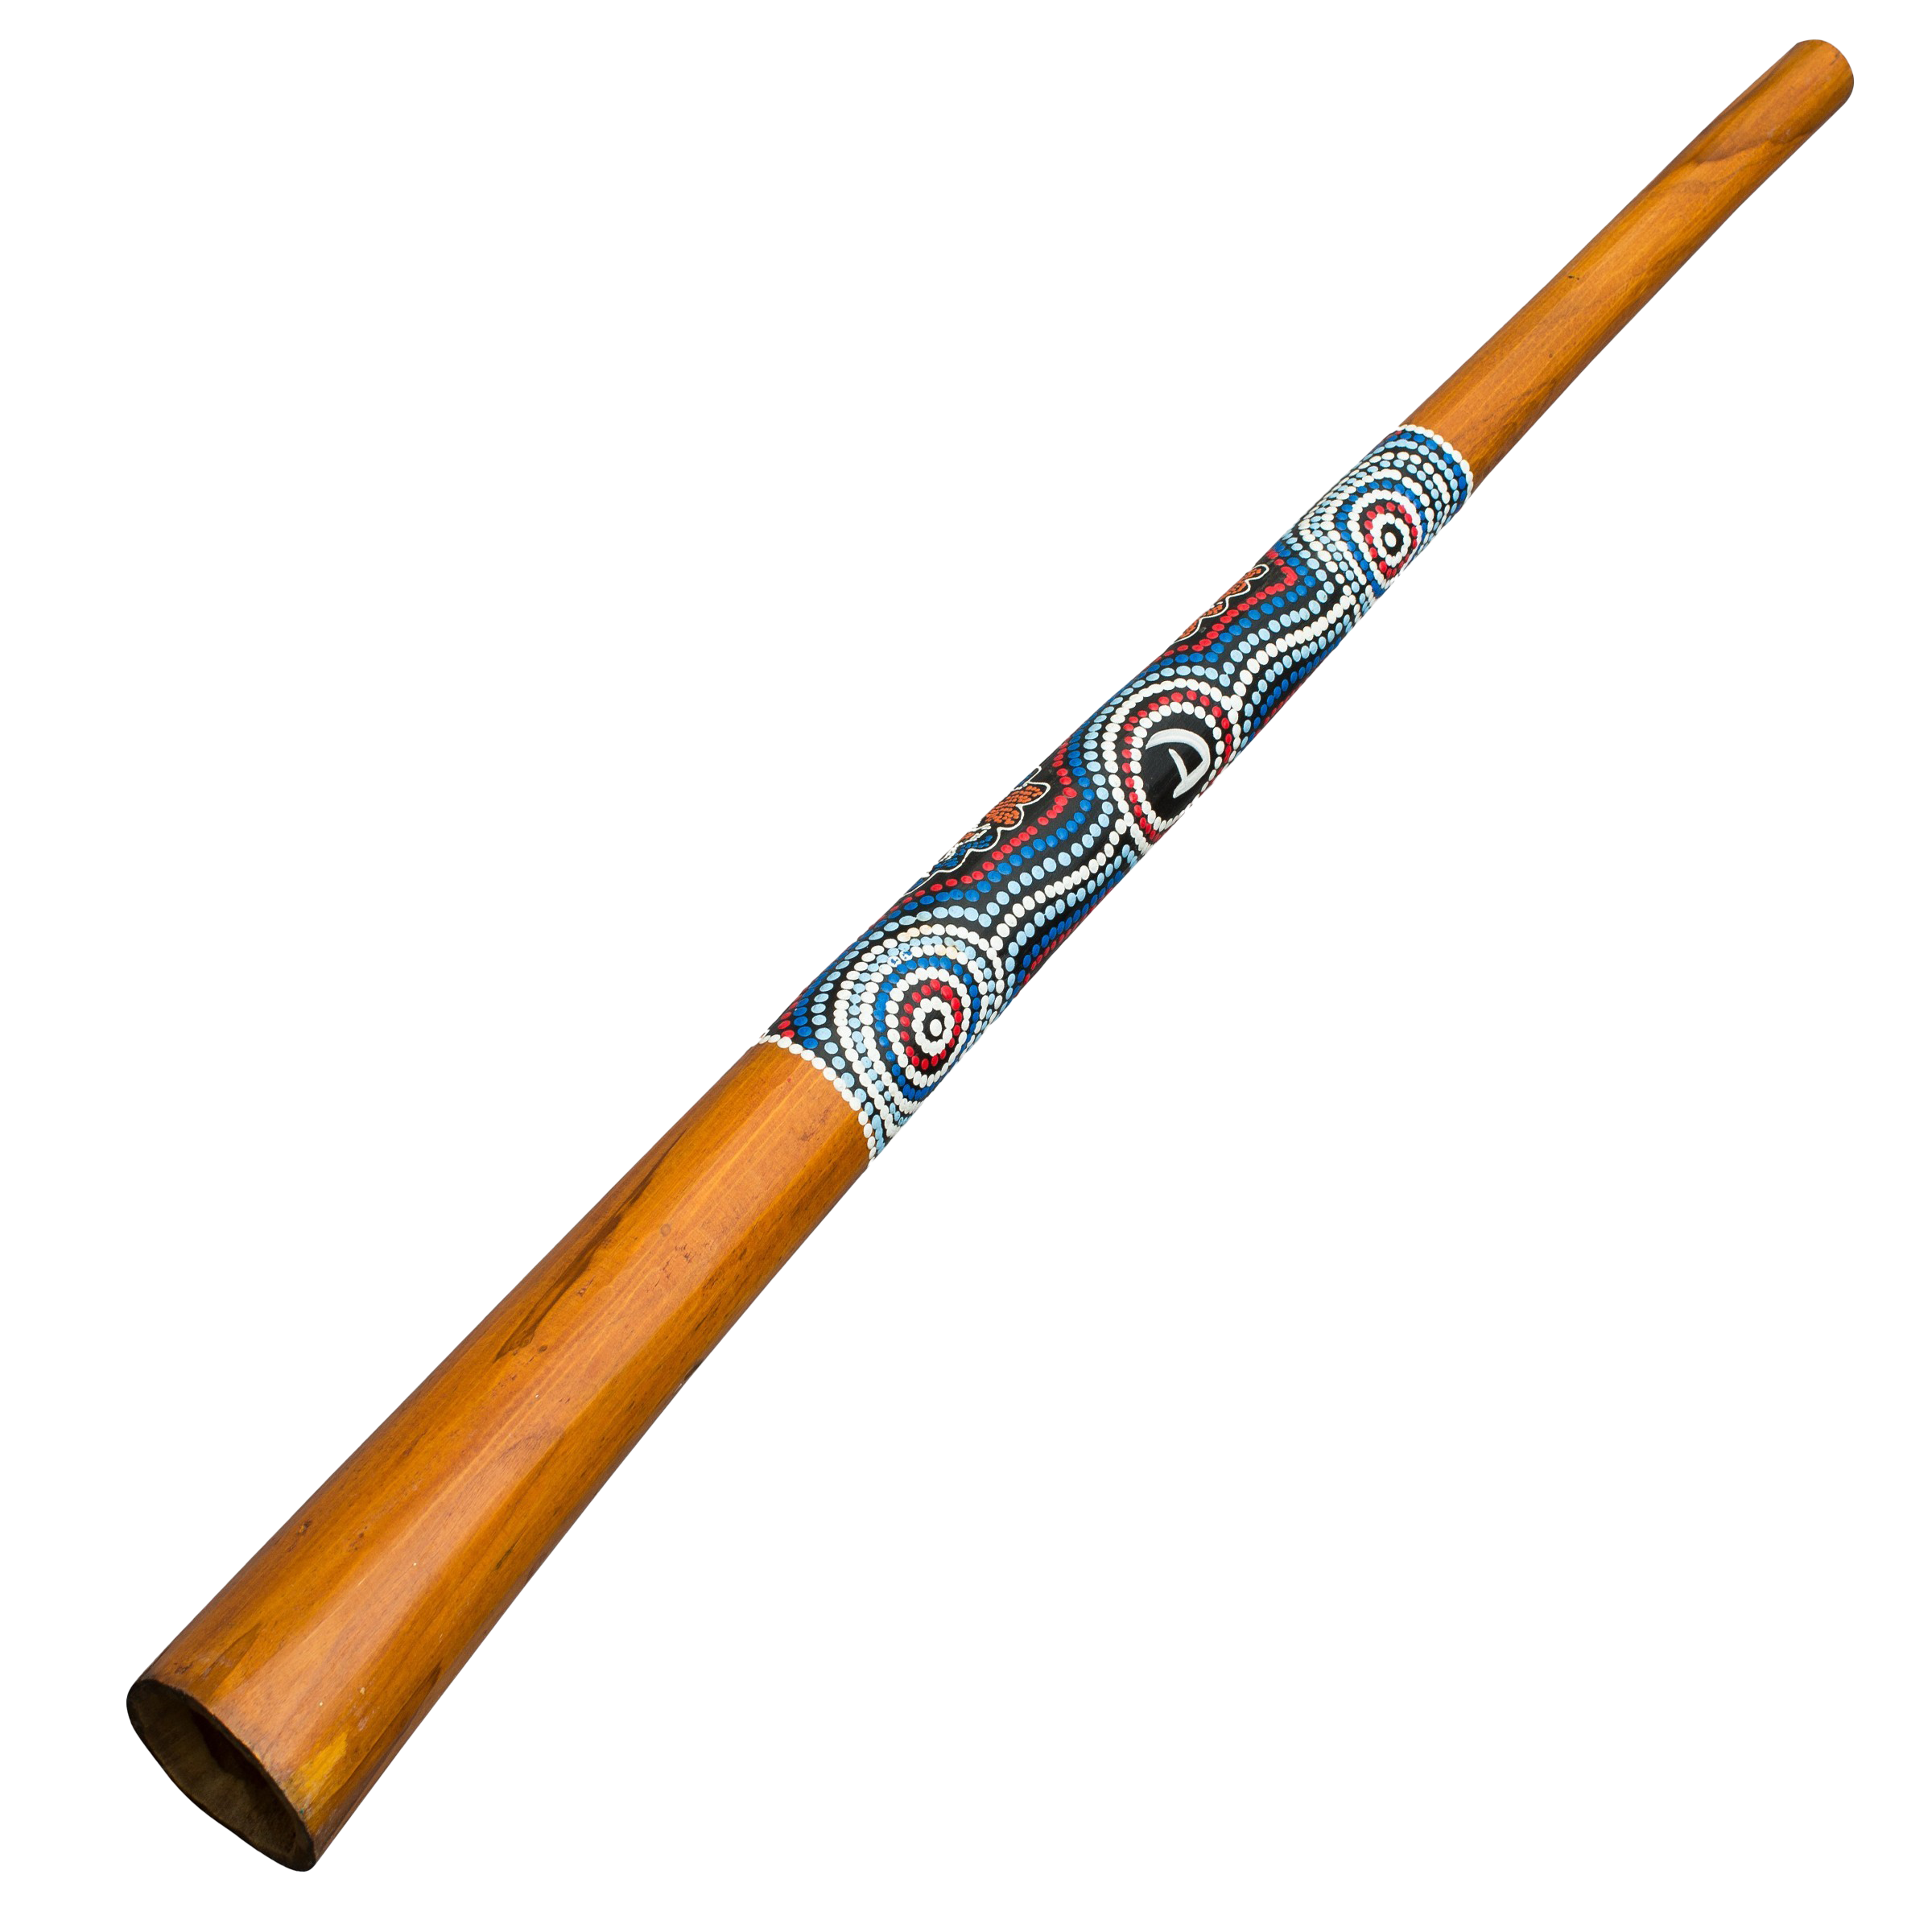 Immagine del PNG senza strumento del vento Didgeridoo